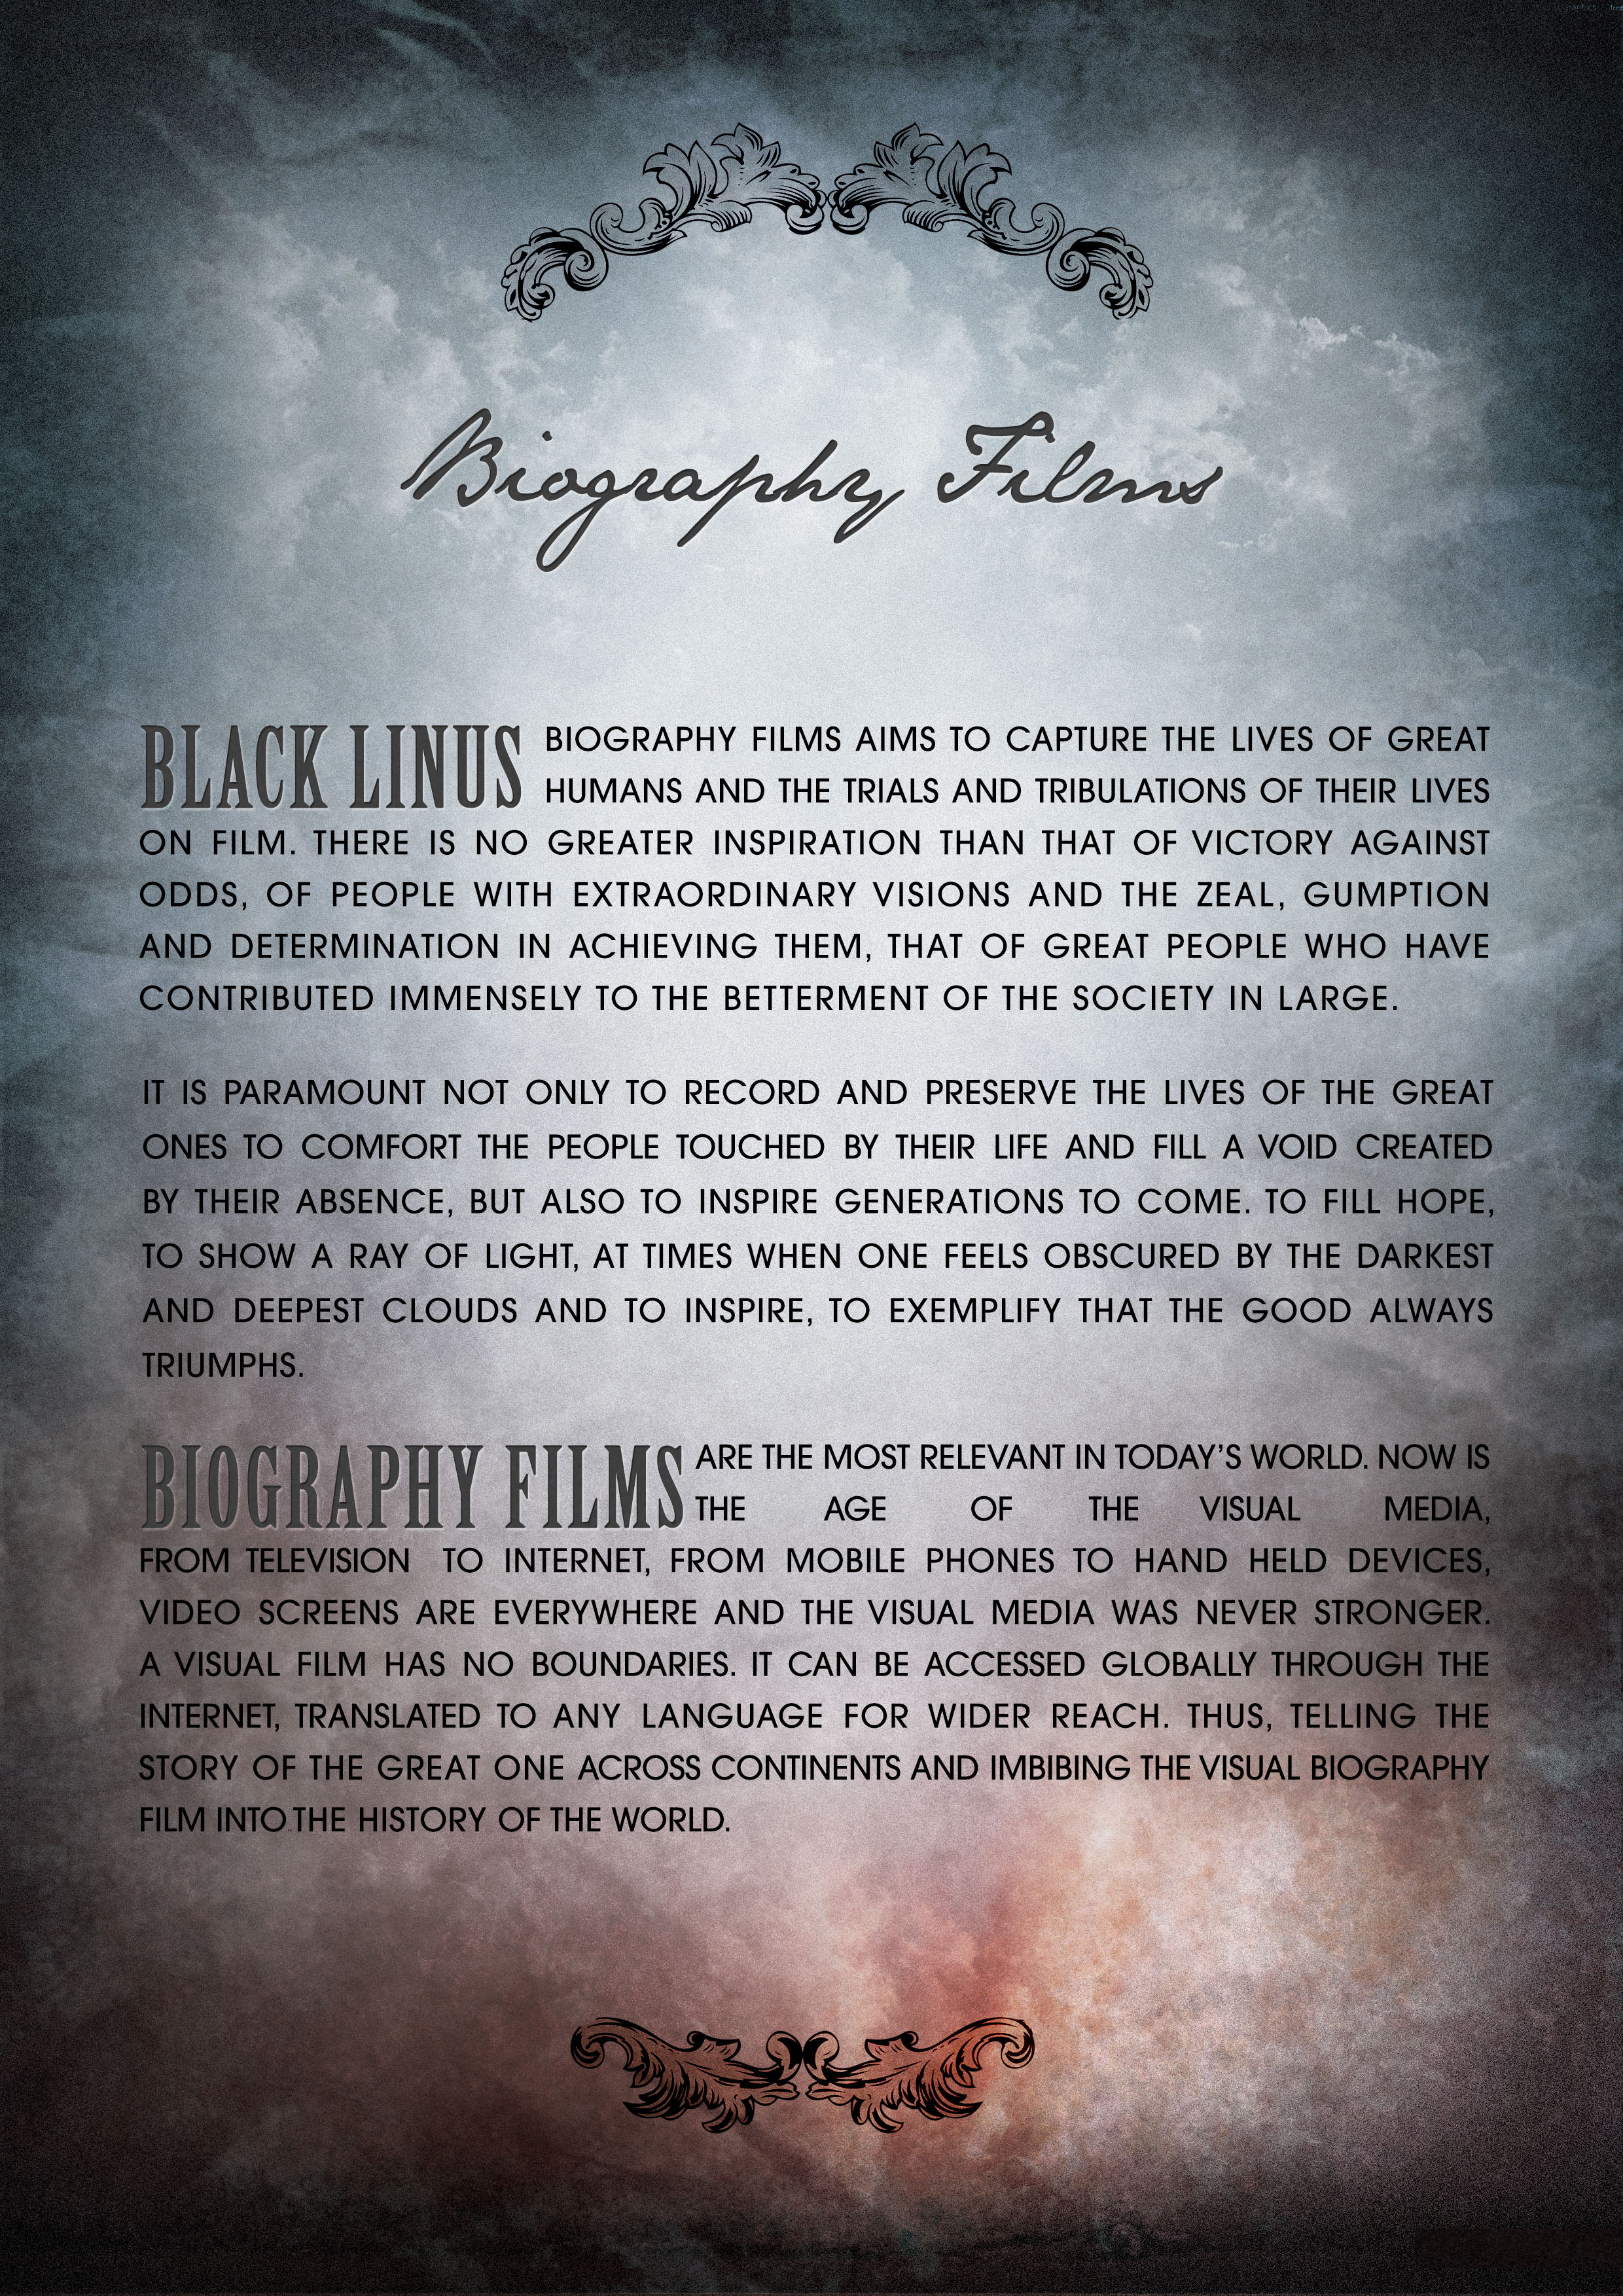 BIOGRAPHY FILMS